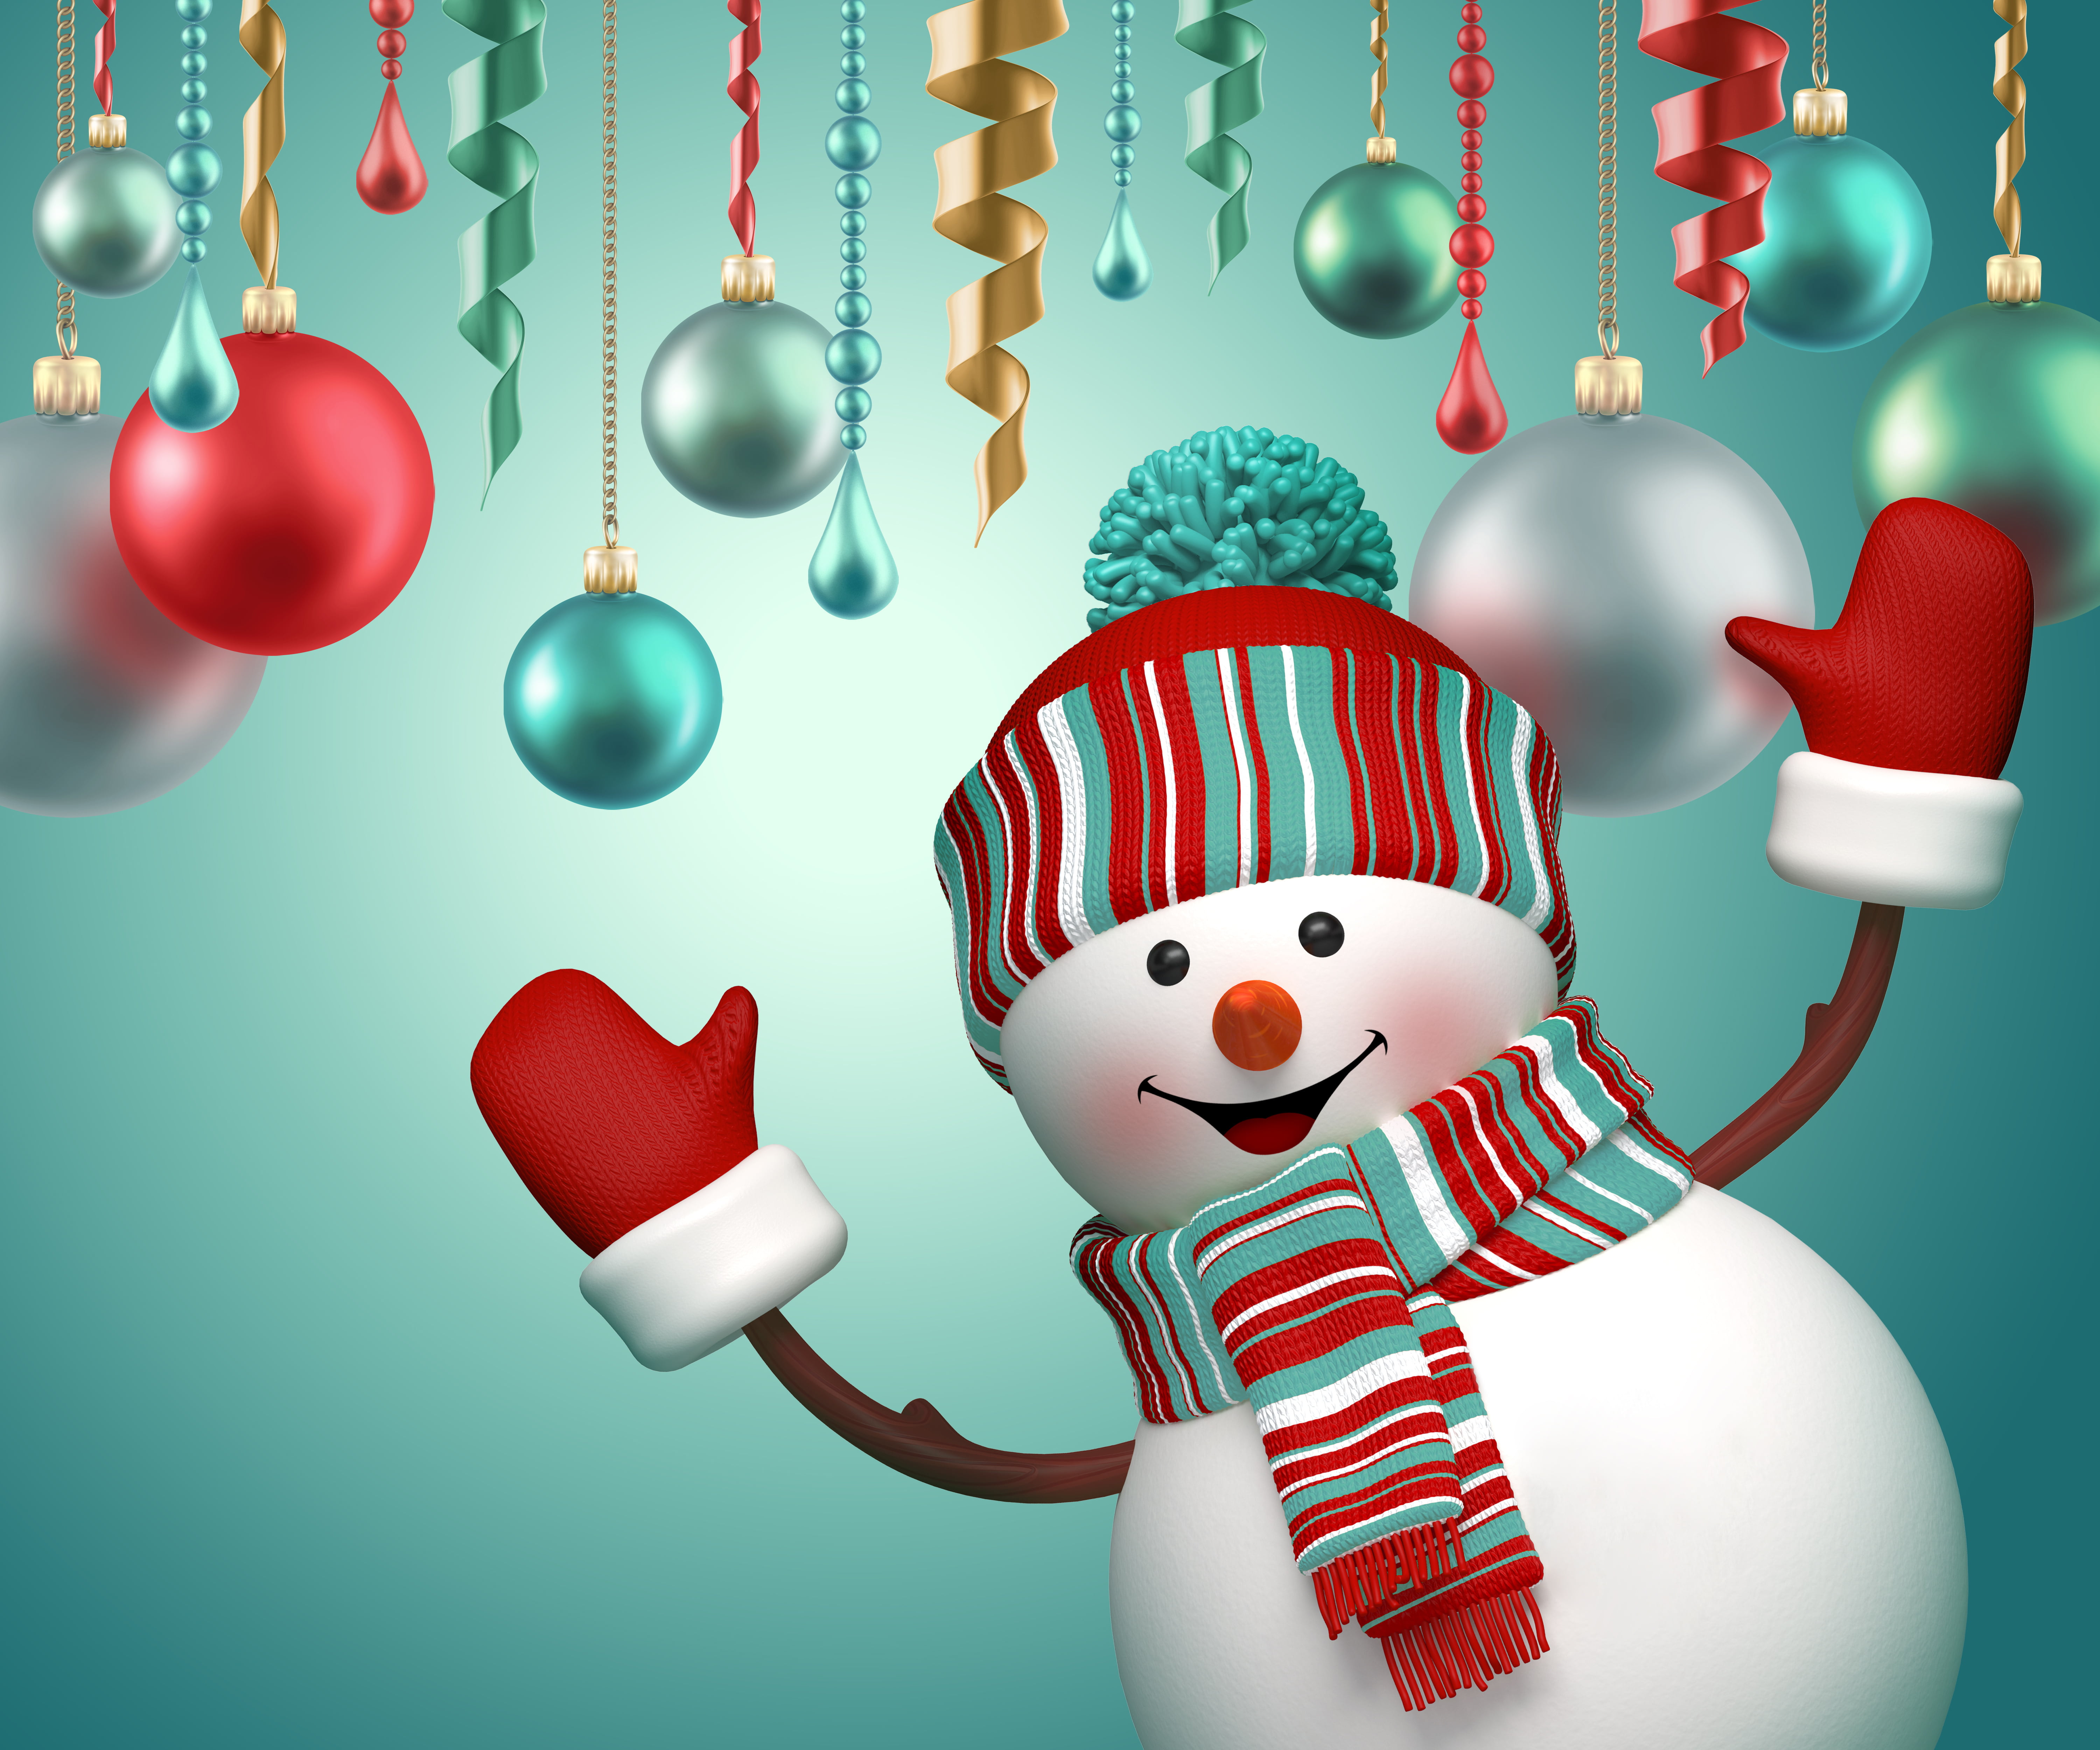 white snowman illustration, balls, New Year, Christmas, cute